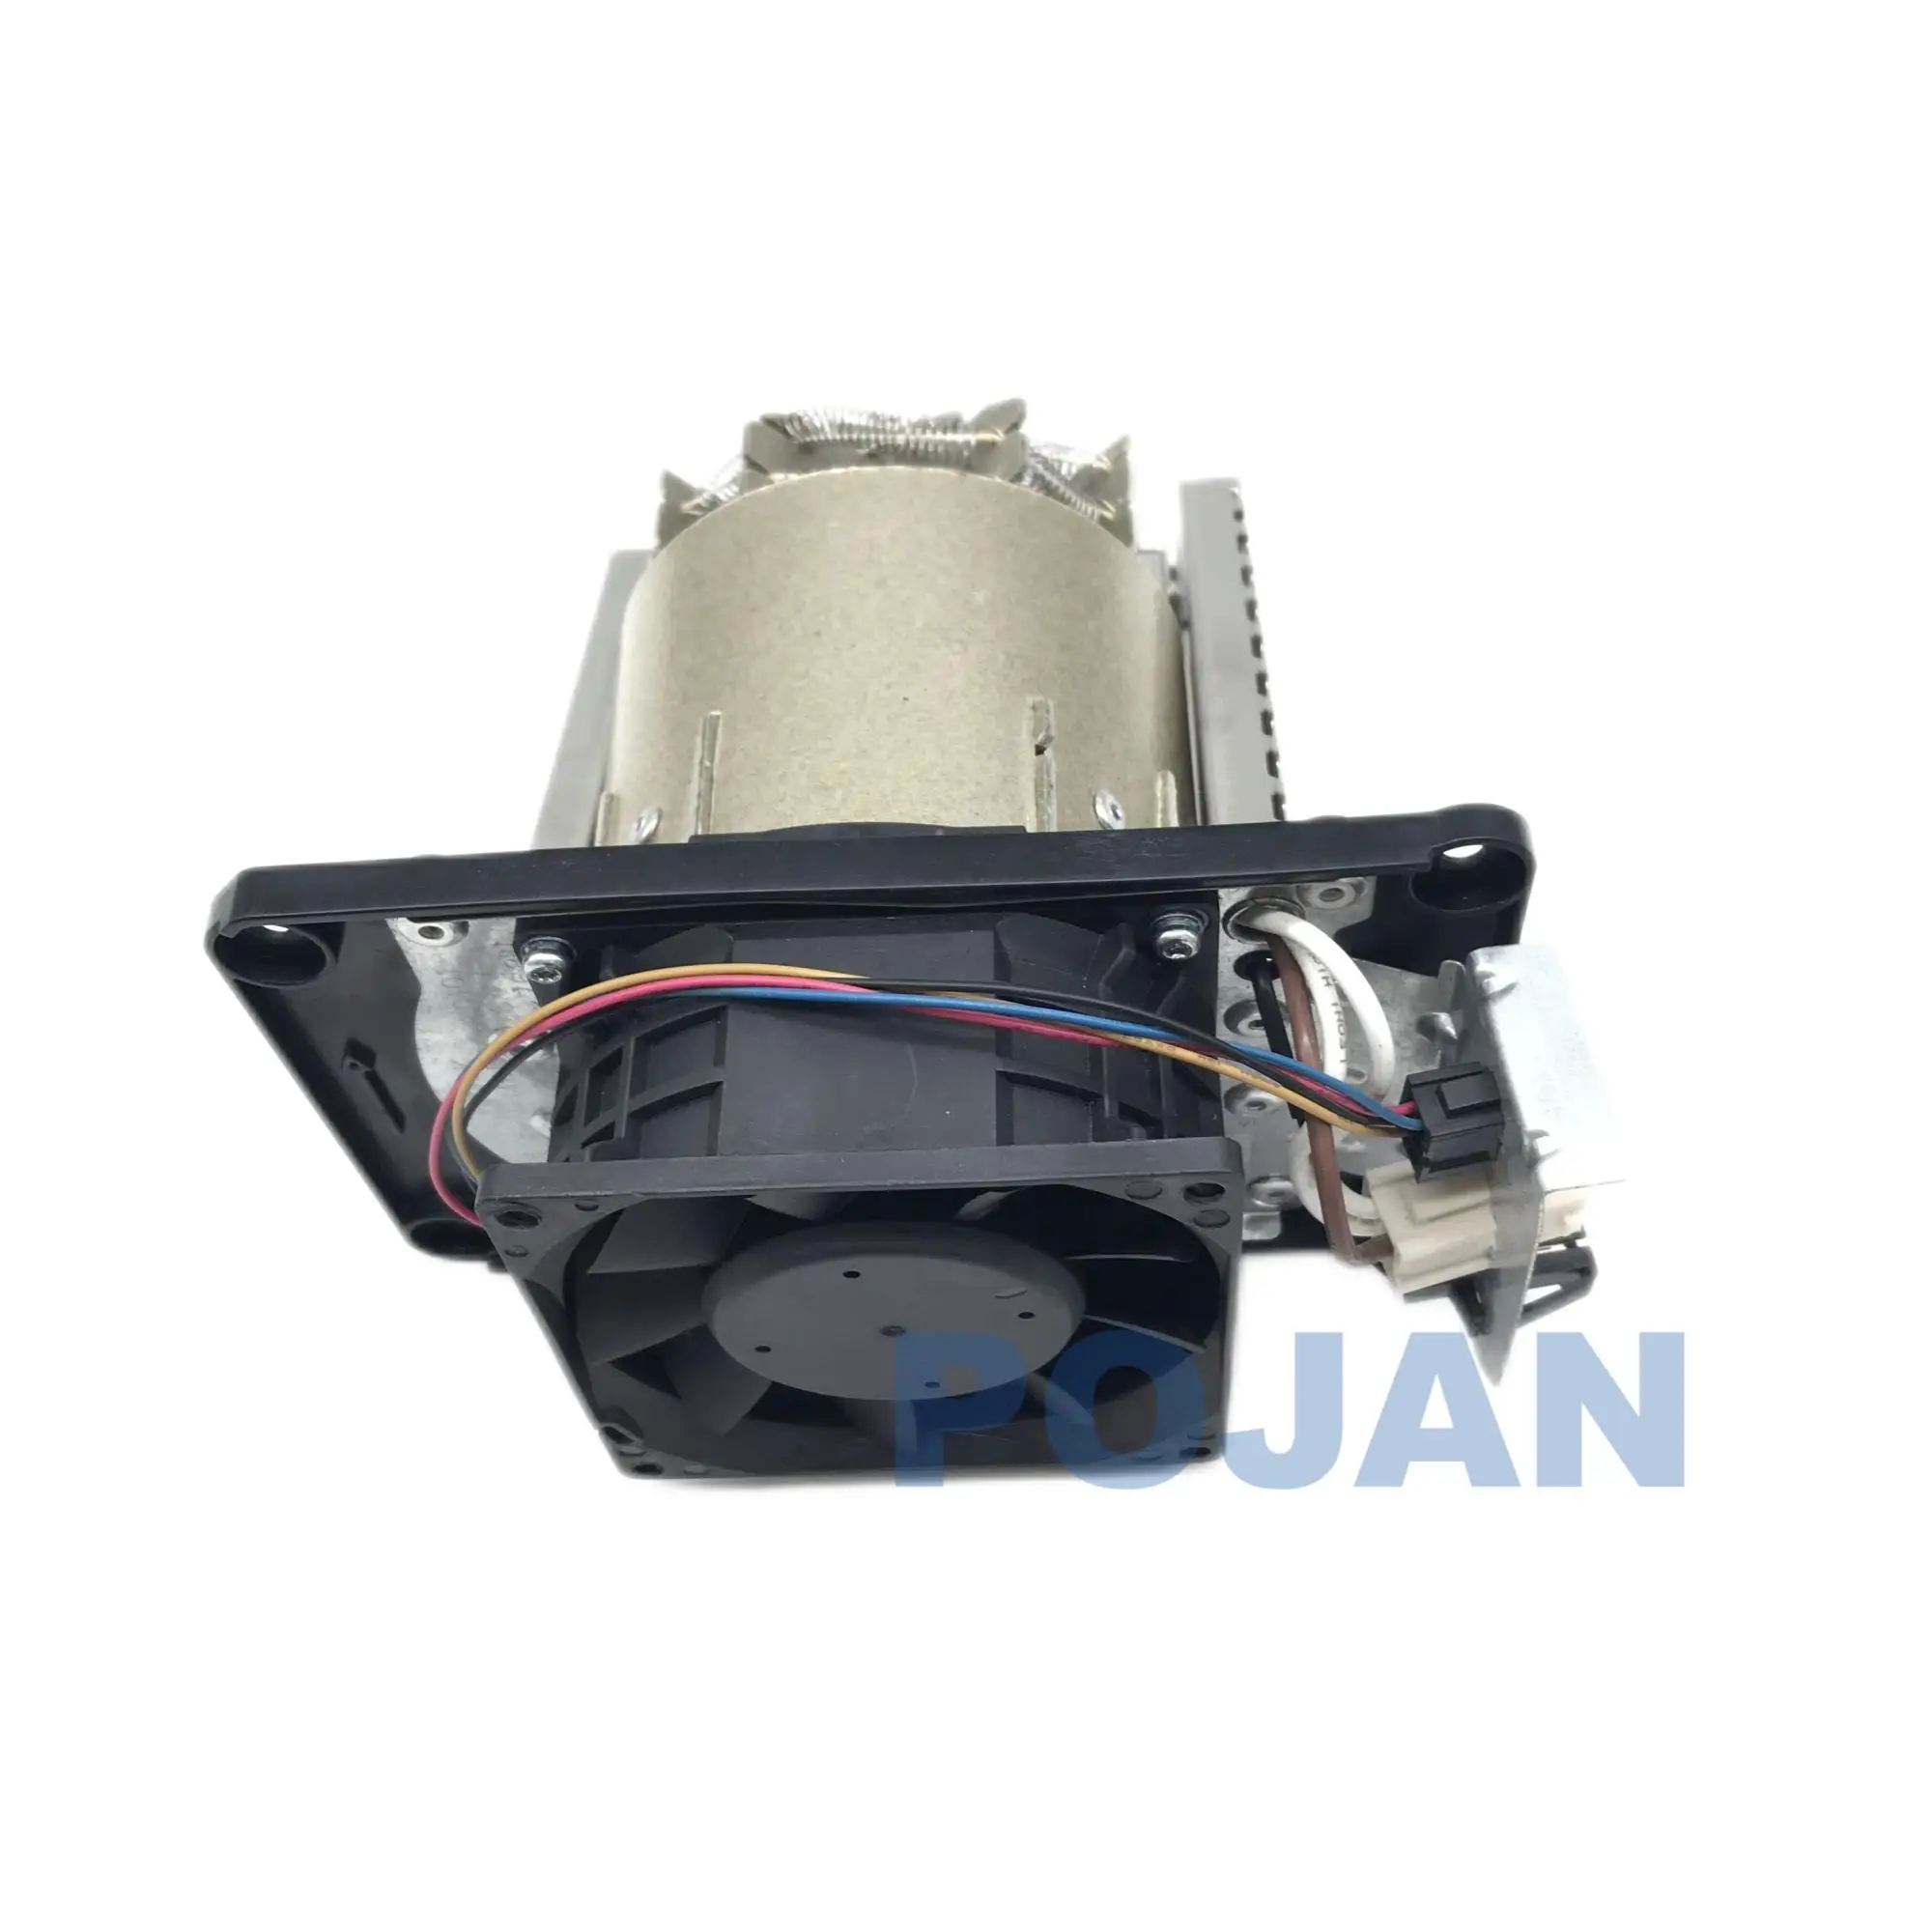 1pcs X M0E29-67047 Fan Heater Assembly Fit For Latex560 570 Printer Refurbished Printer Plotter Parts POJAN